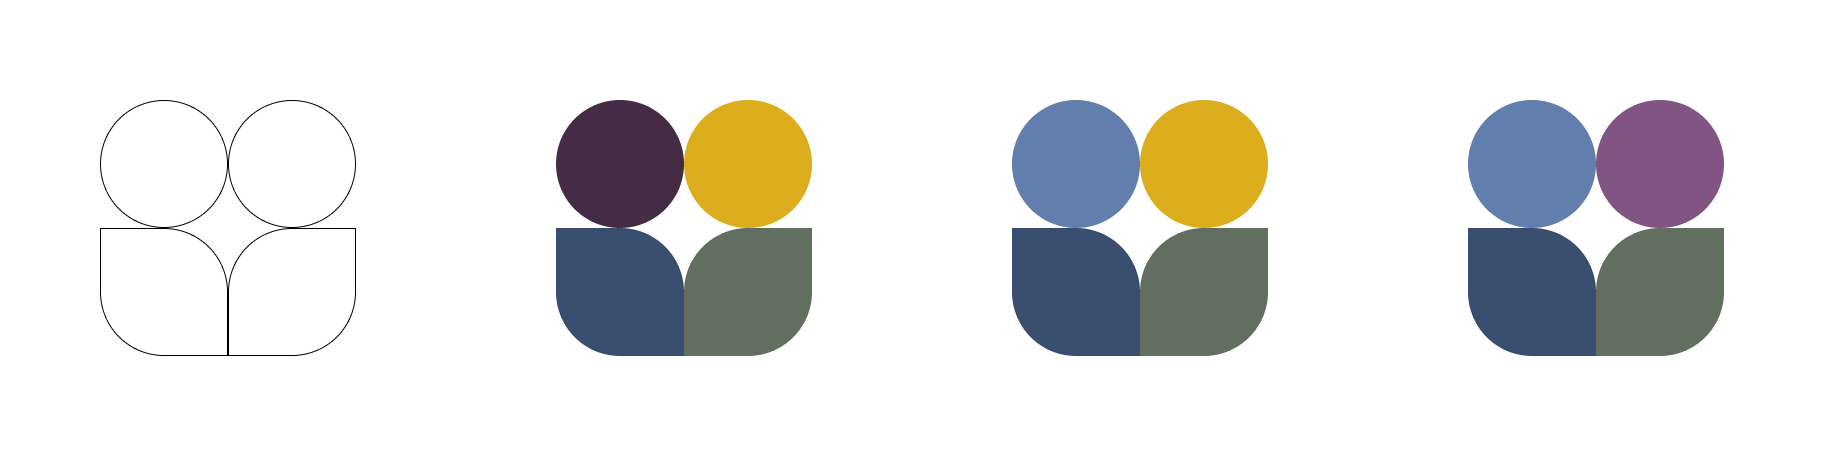 Adding colors to the Lagom UI logo option B